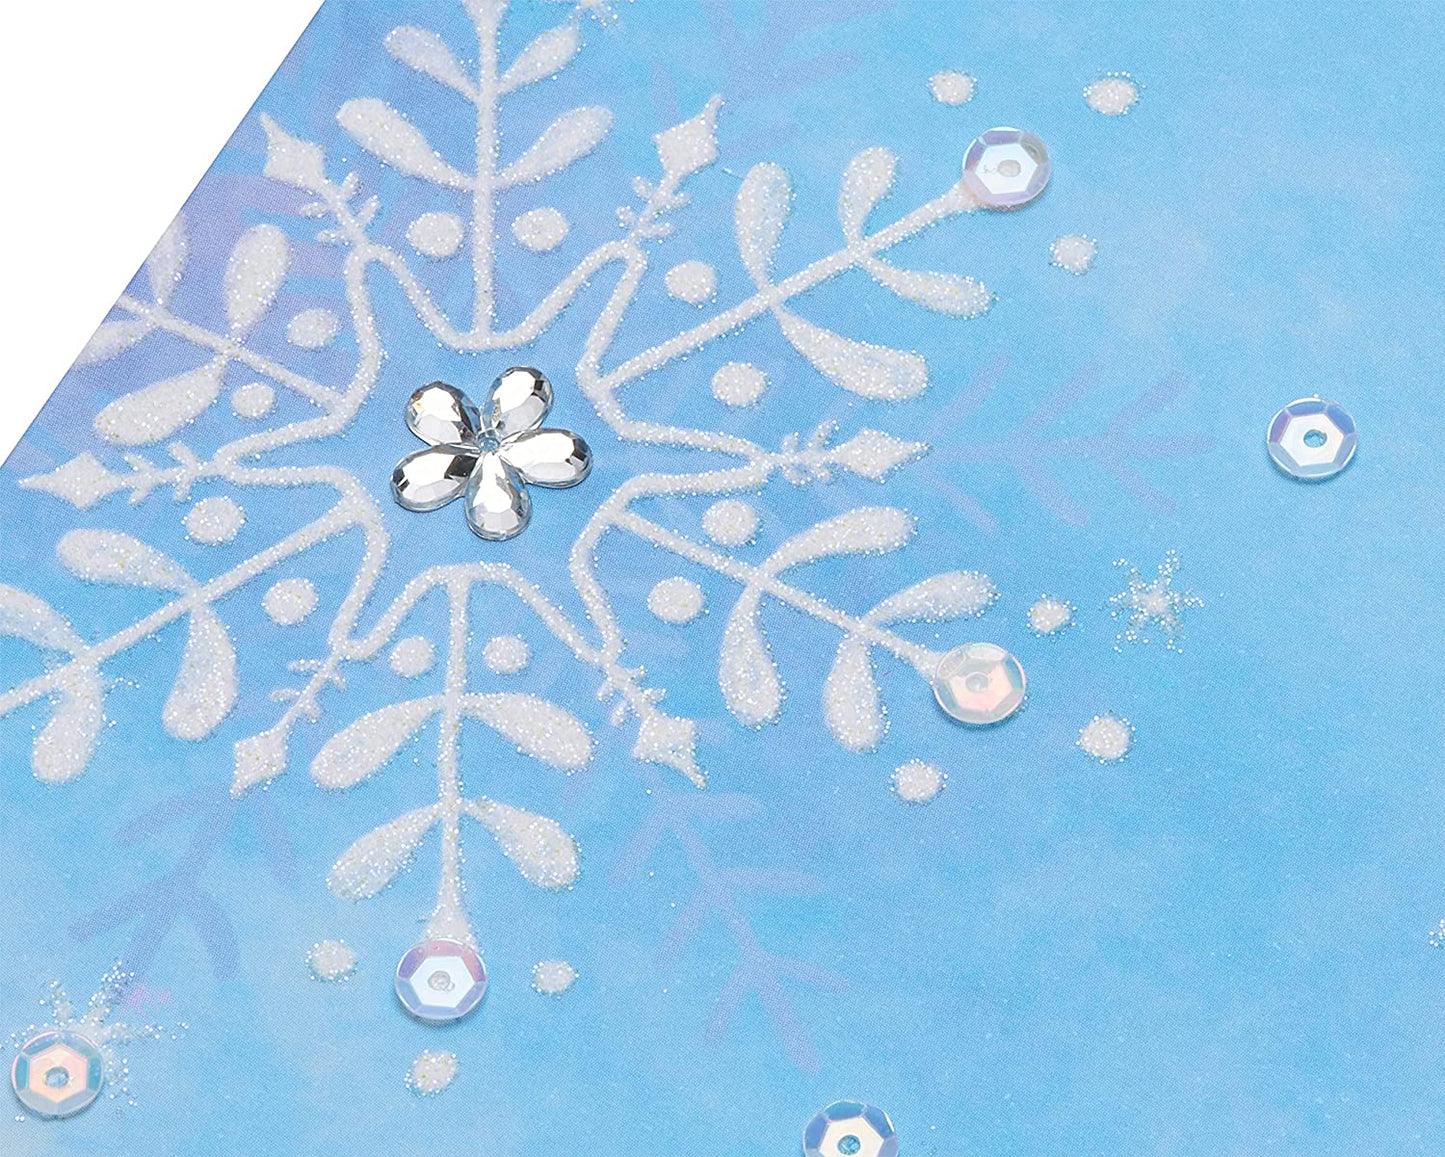 Papyrus Blank Holiday Card (Snowflakes)